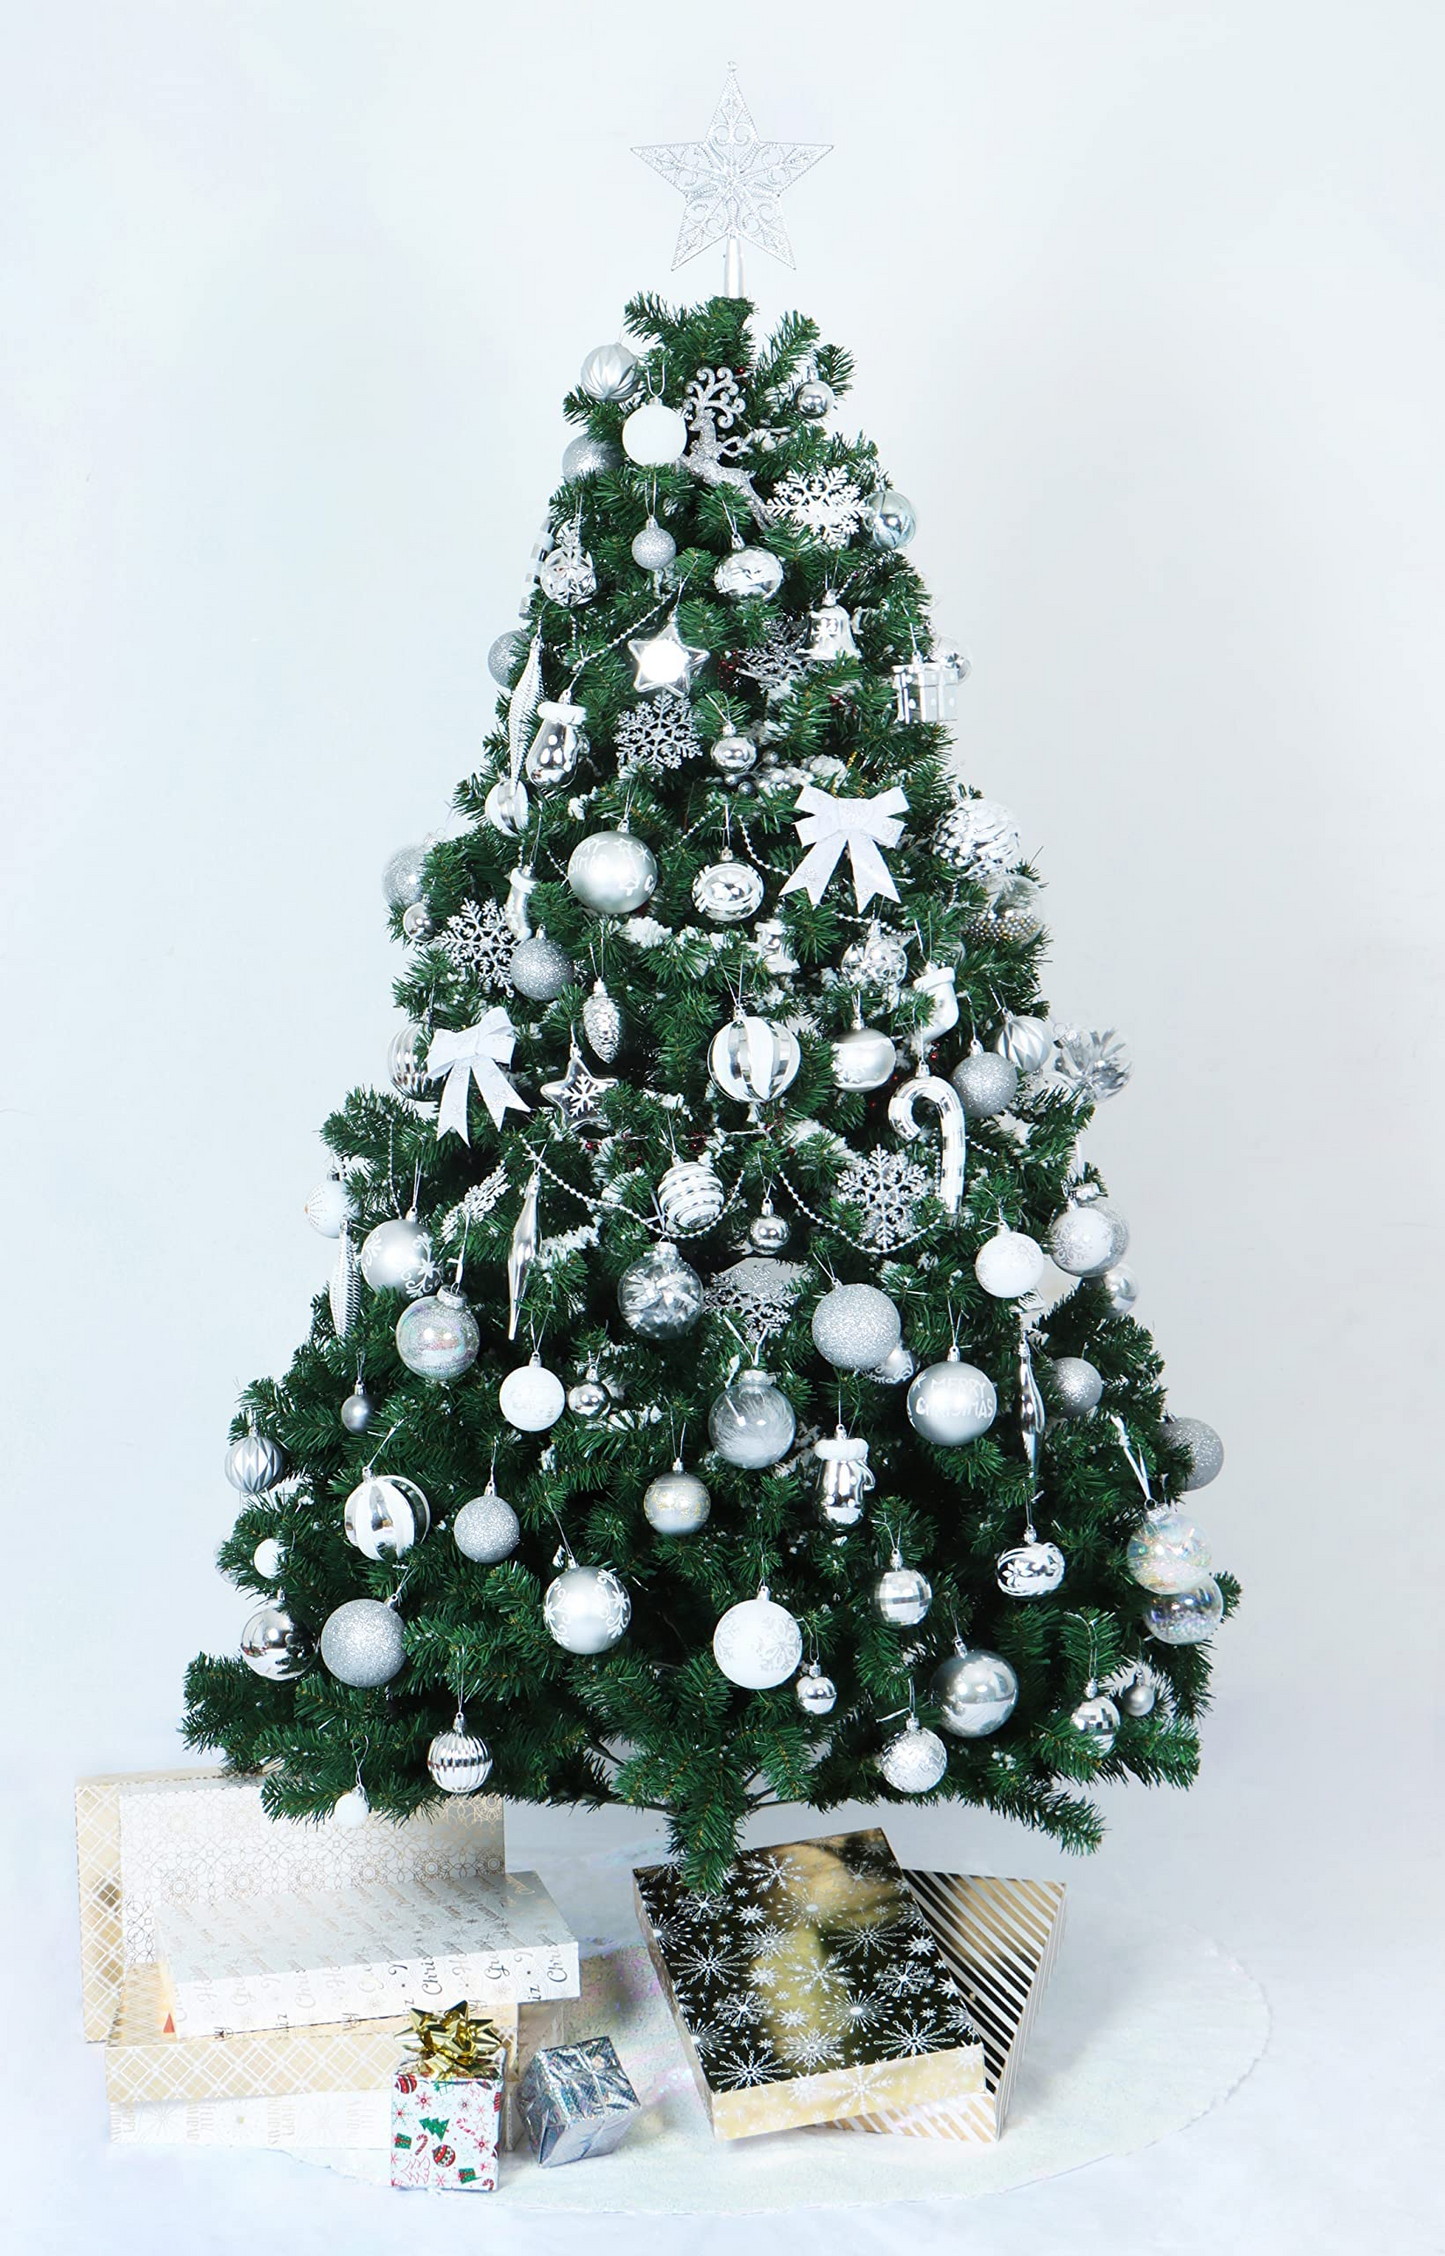 24ct 6CM Basic Christmas Ball Ornaments - Silver